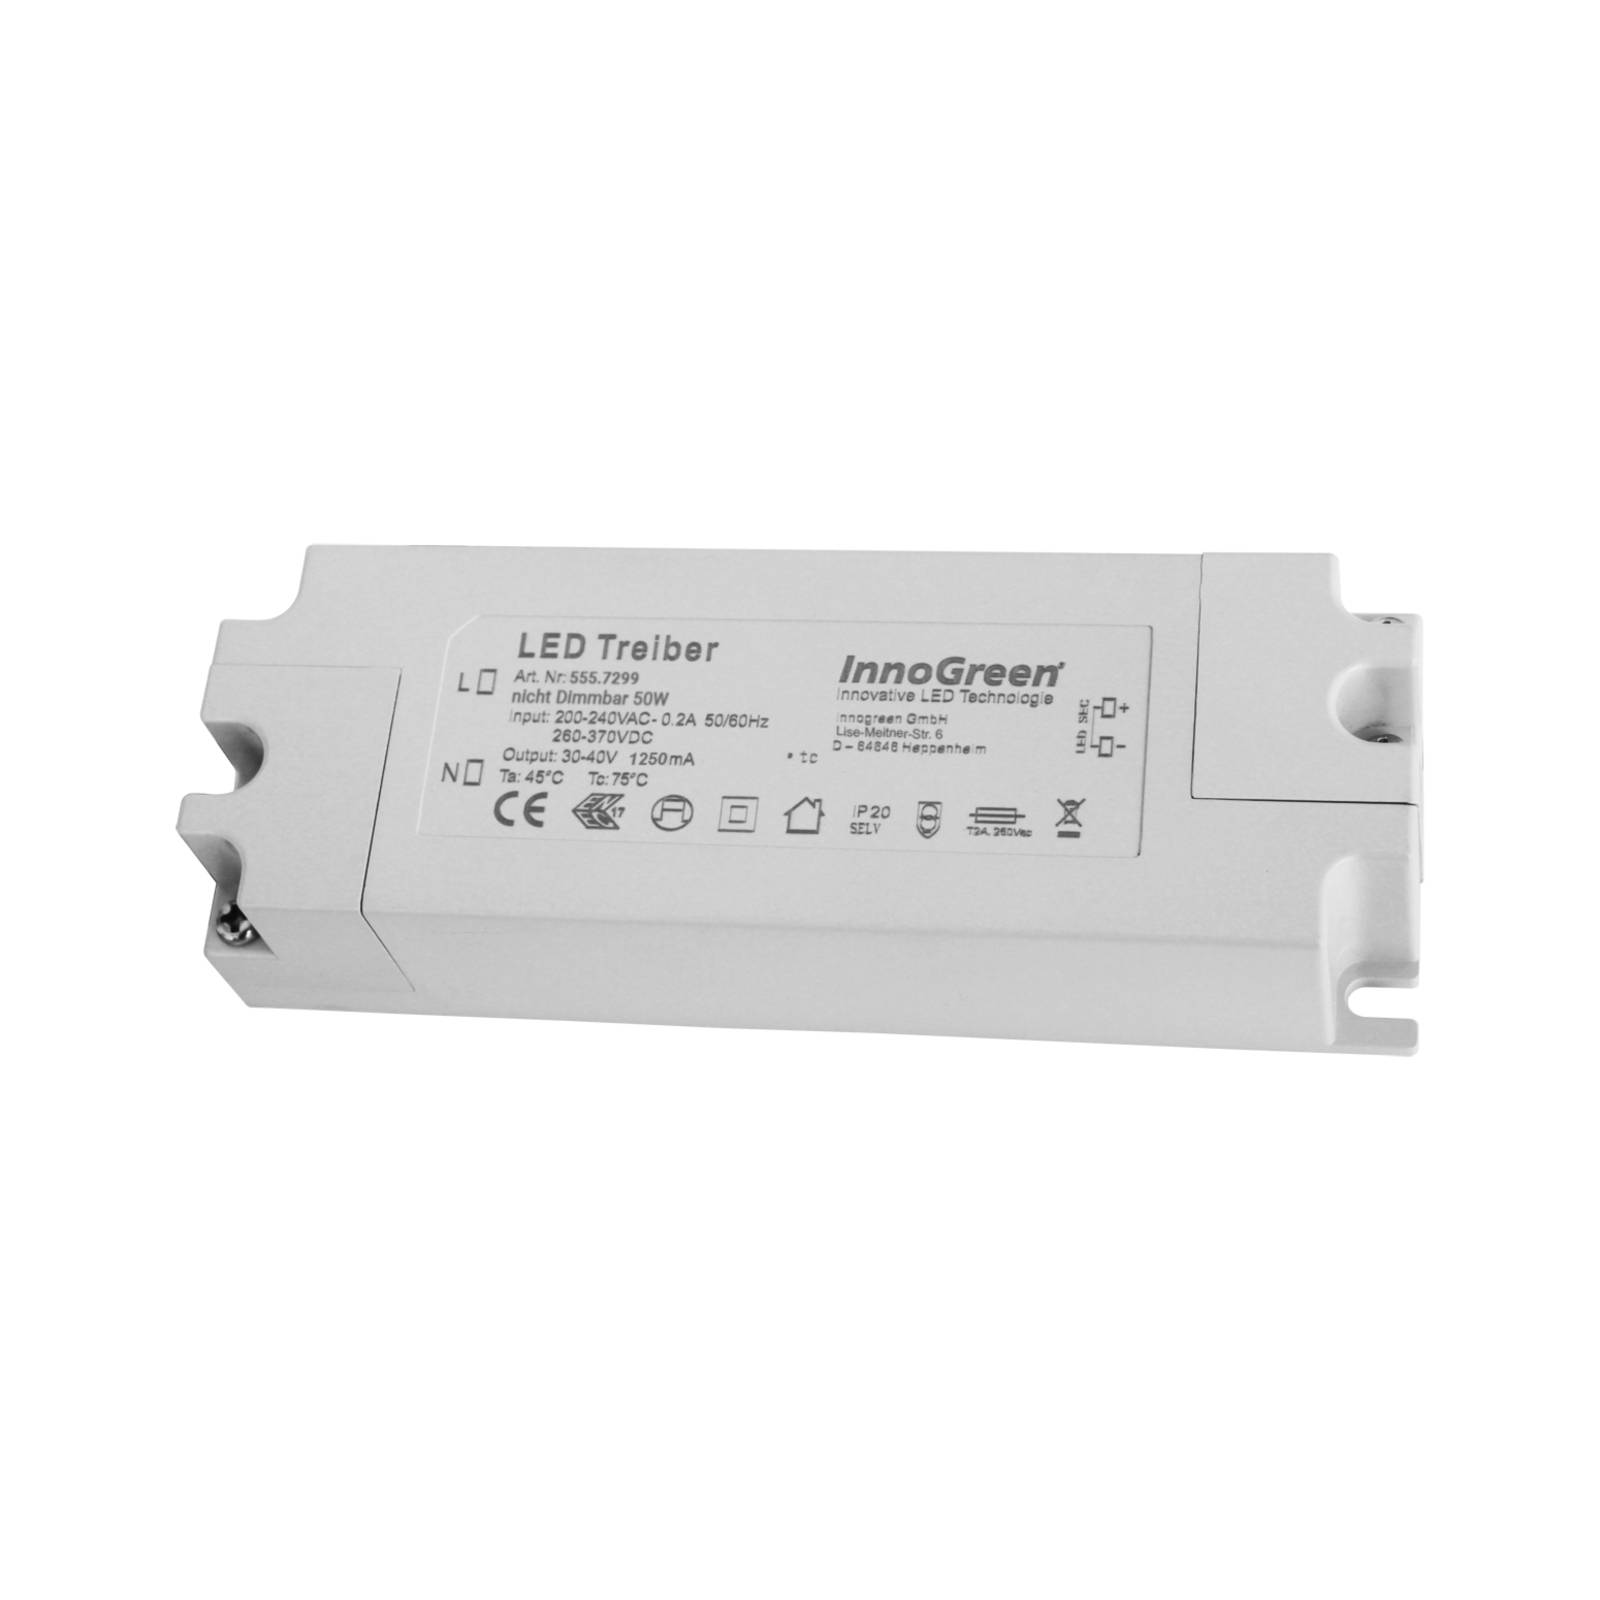 InnoGreen LED driver 220-240 V (AC/DC) 50W